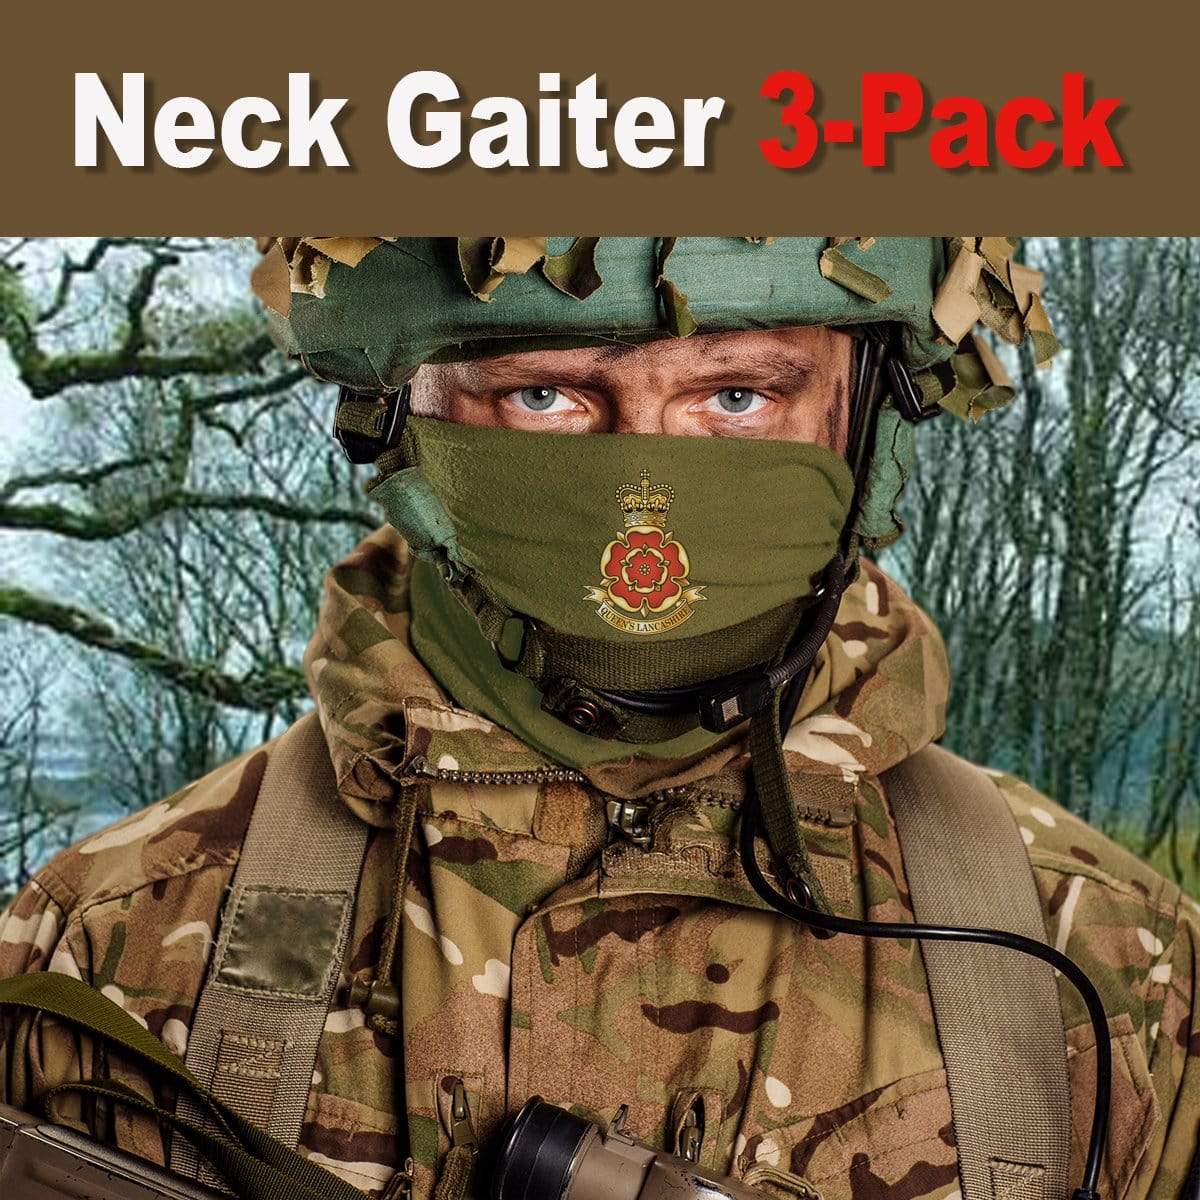 neck gaiter Bandana 3-Pack - Queen's Lancashire Regiment Neck Gaiter 3-Pack Queen's Lancashire Regiment Neck Gaiter/Headover 3-Pack